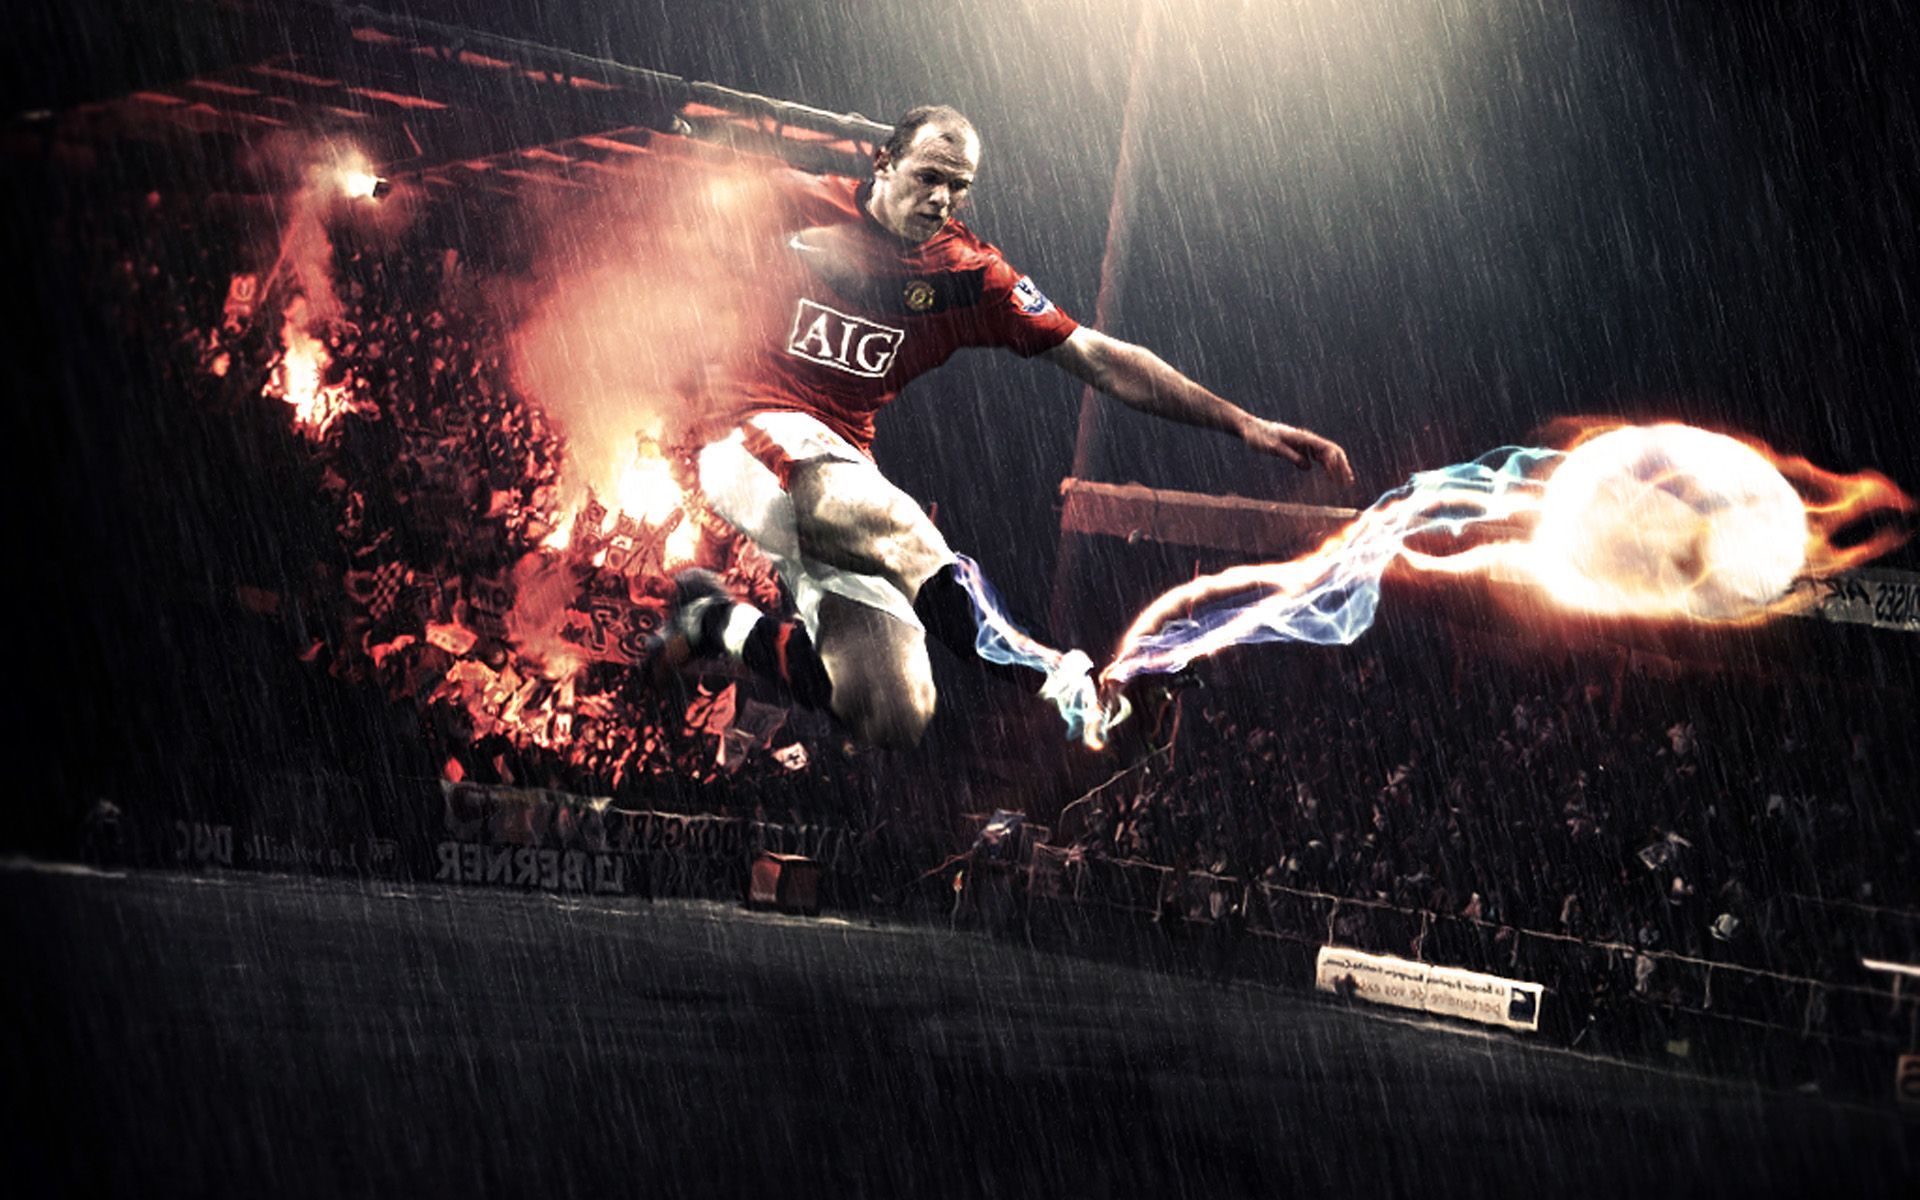 Wayne Rooney 3D wallpaper. Sportsbook, Wayne rooney, Manchester united wallpaper